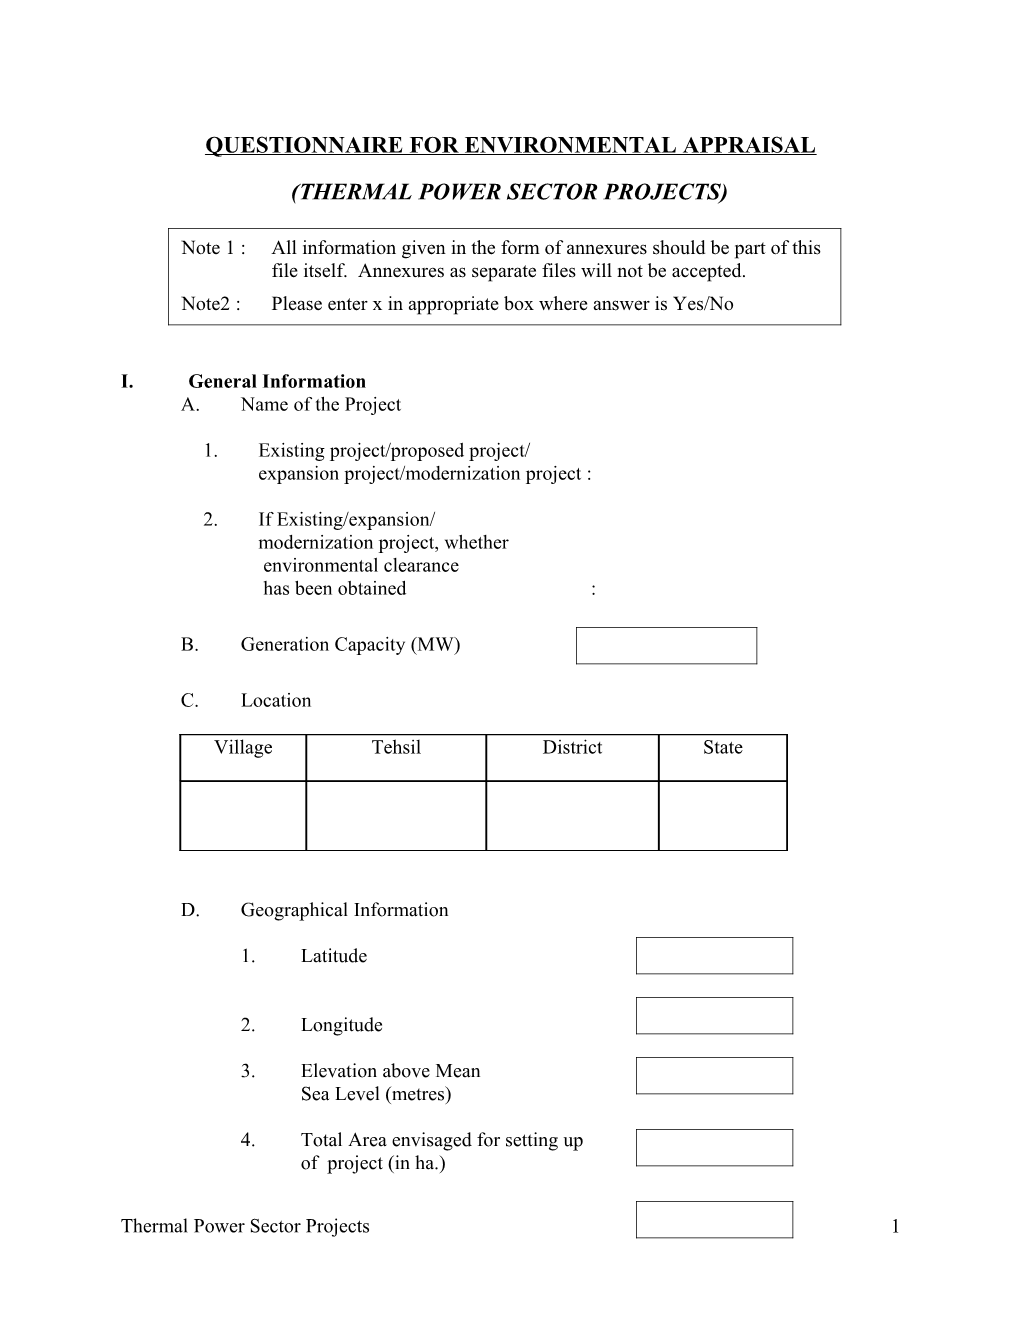 Questionnaire for Environmental Appraisal